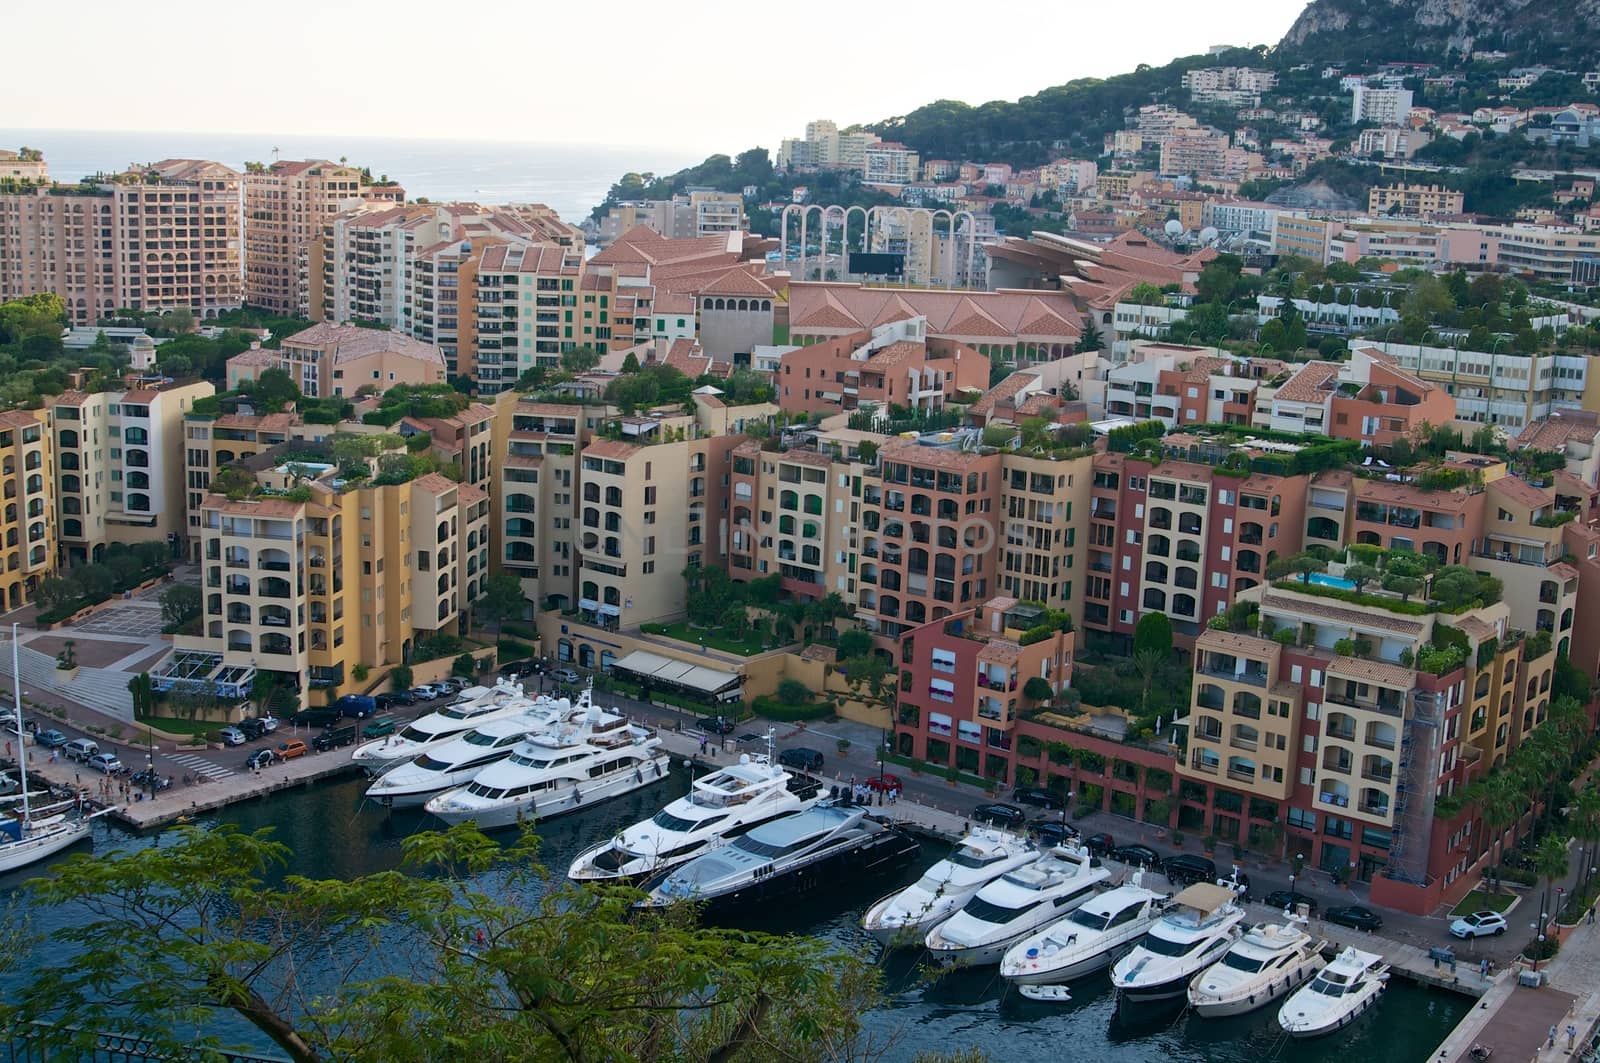 Marina in Monaco by dyvan